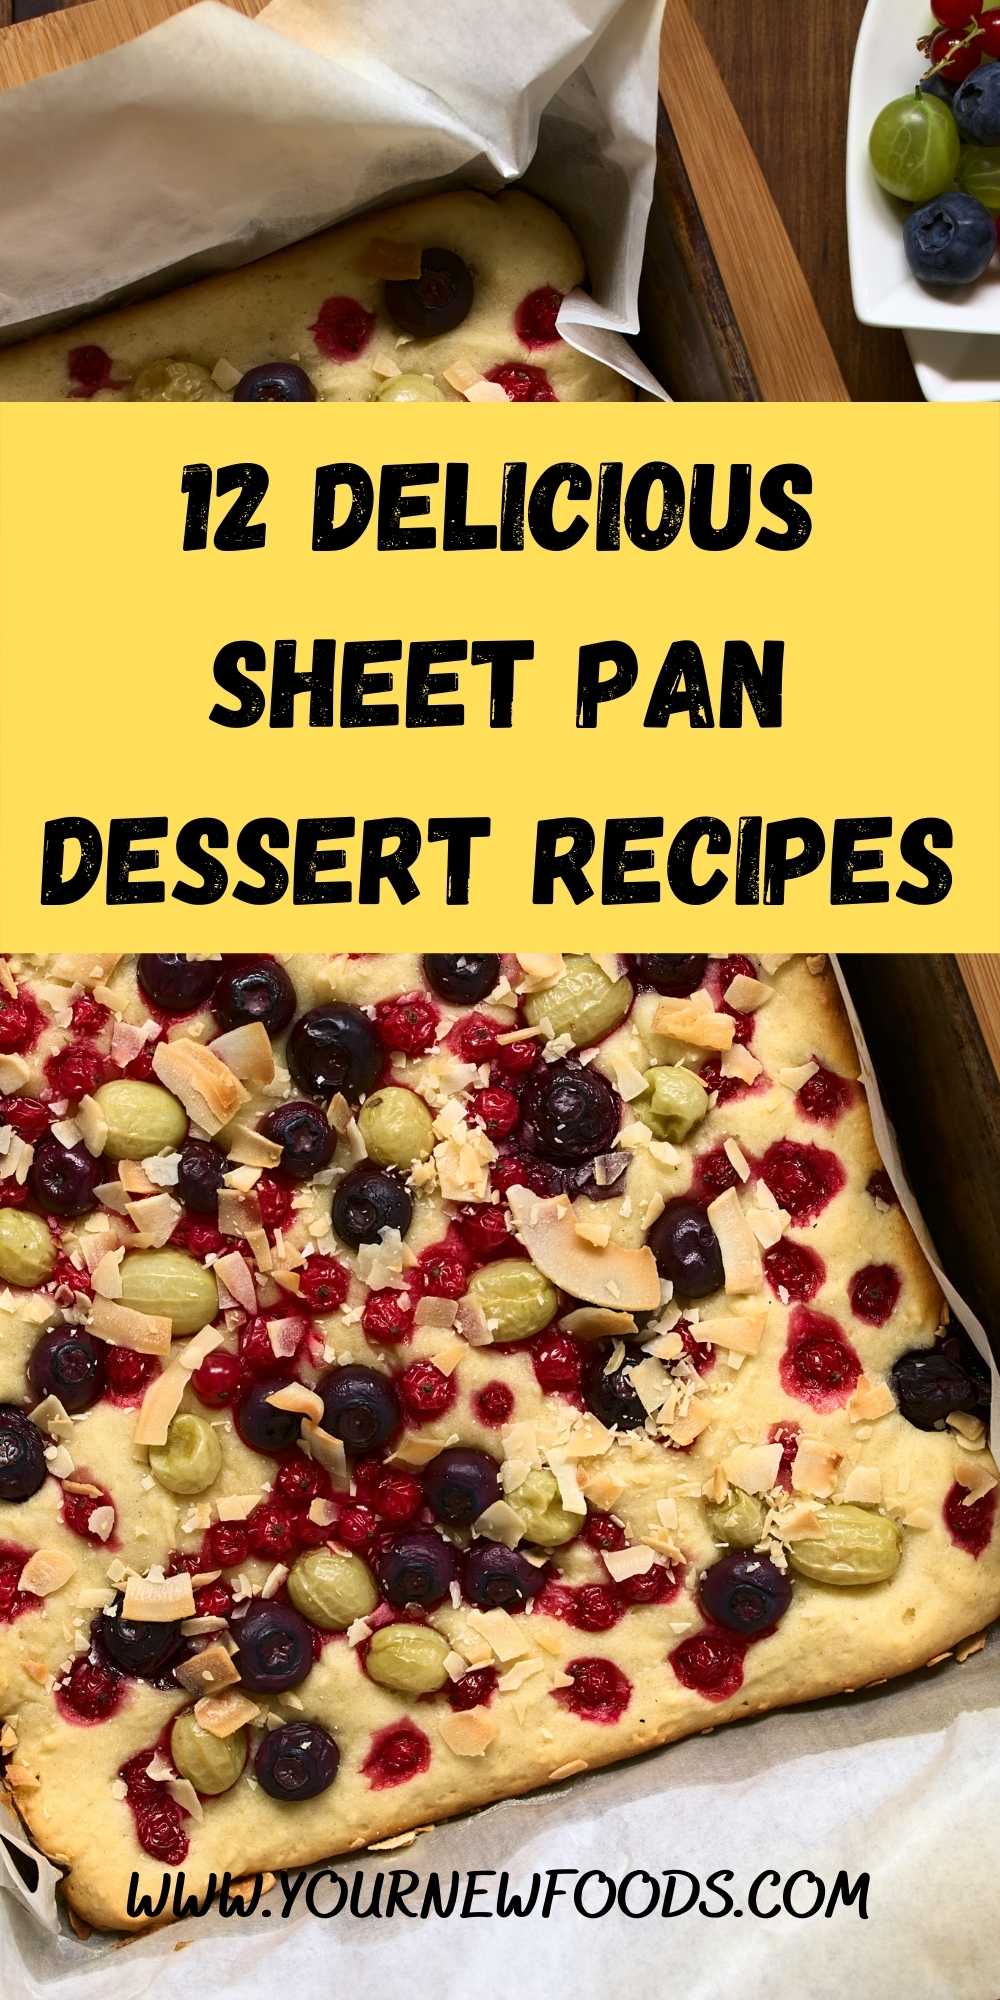 Sheet Pan Dessert Recipe with berries